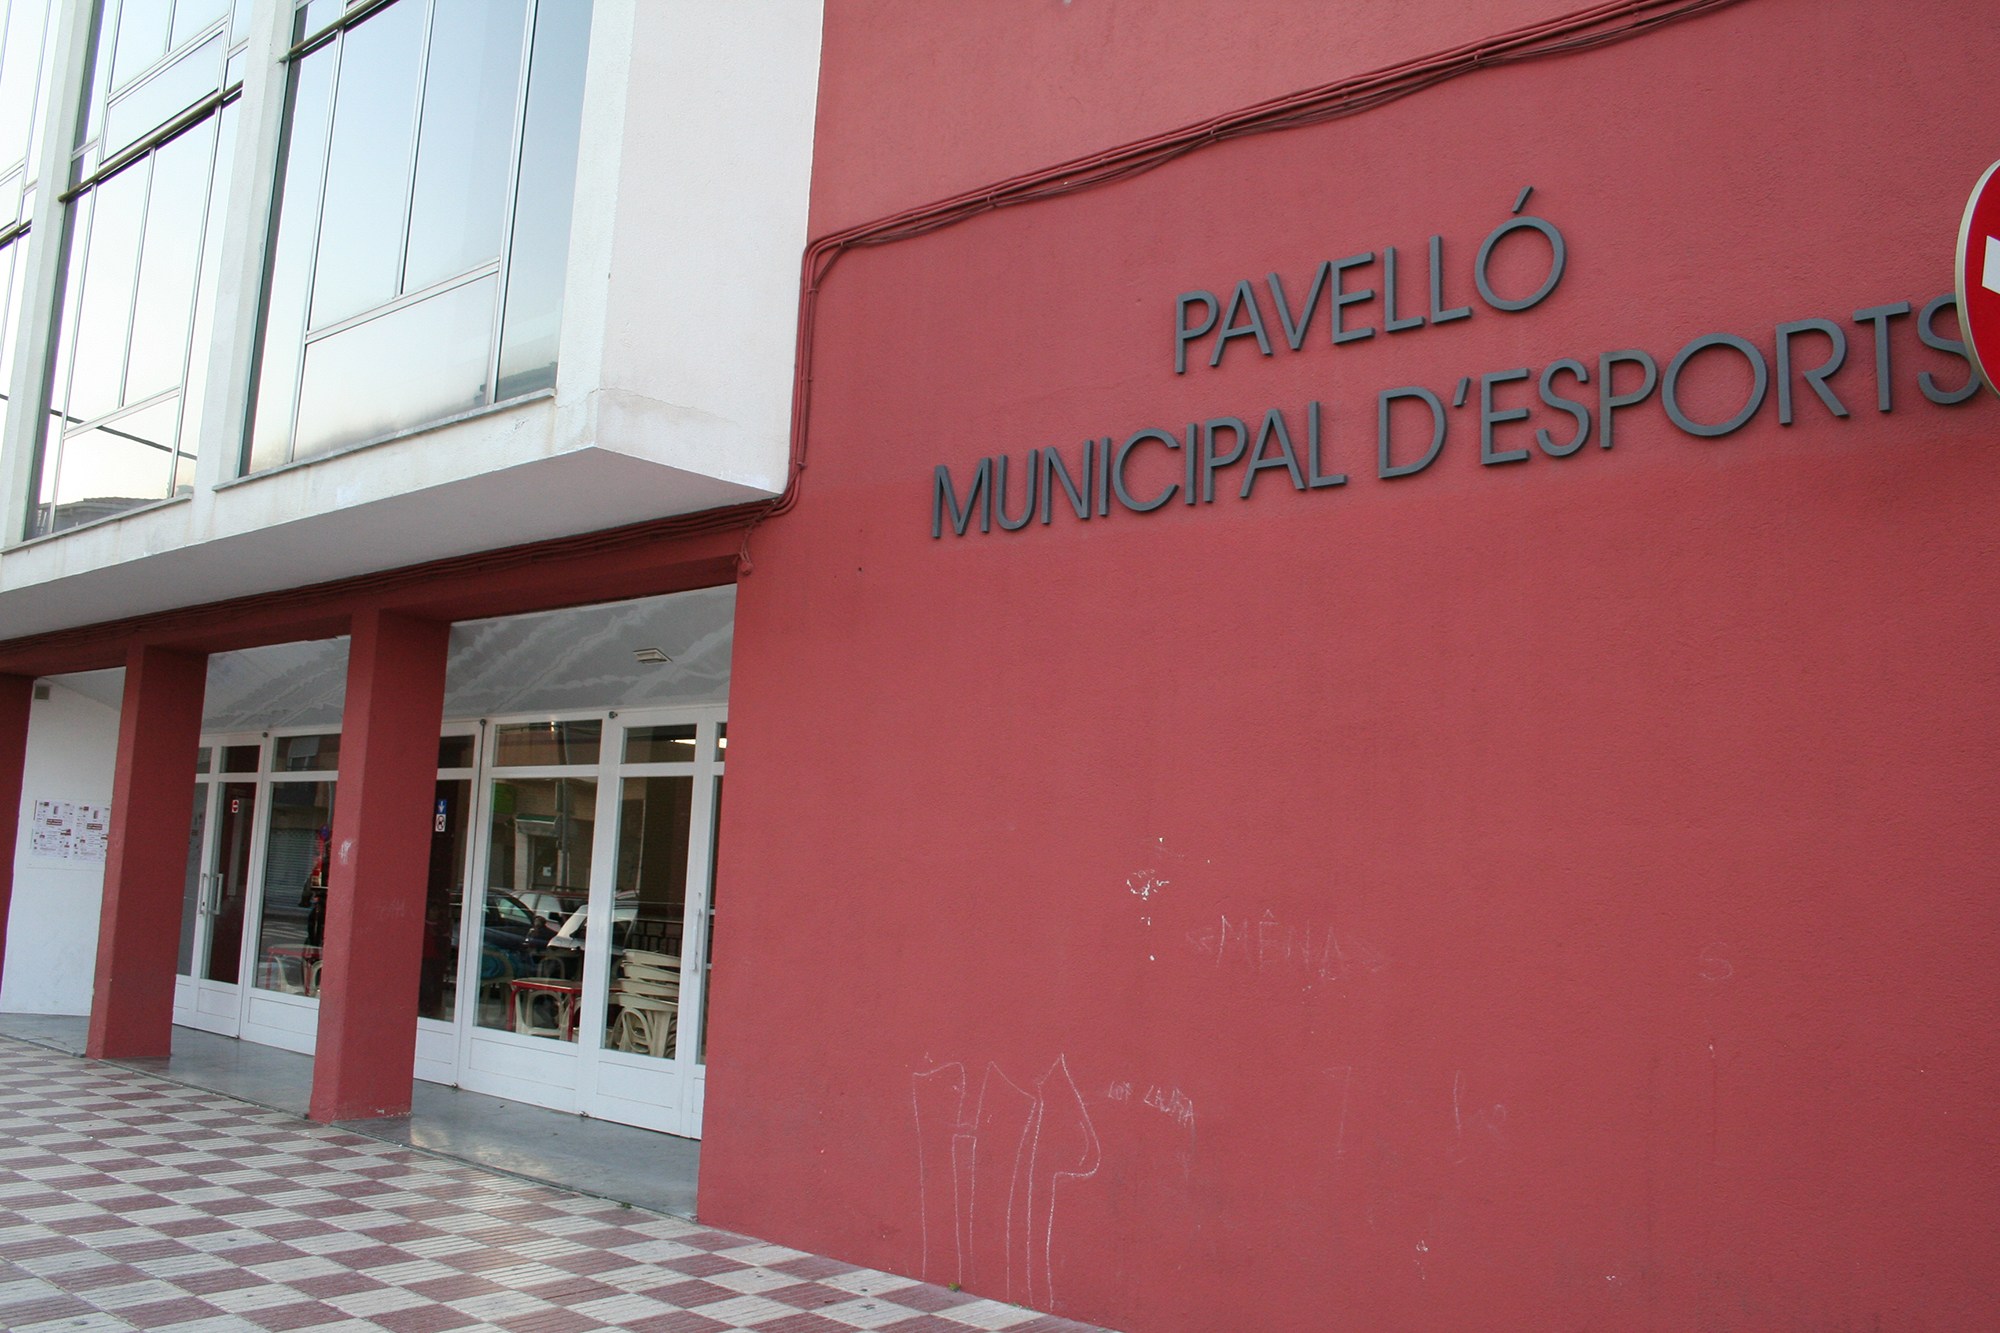 PavellÃ³ municipal d'esports